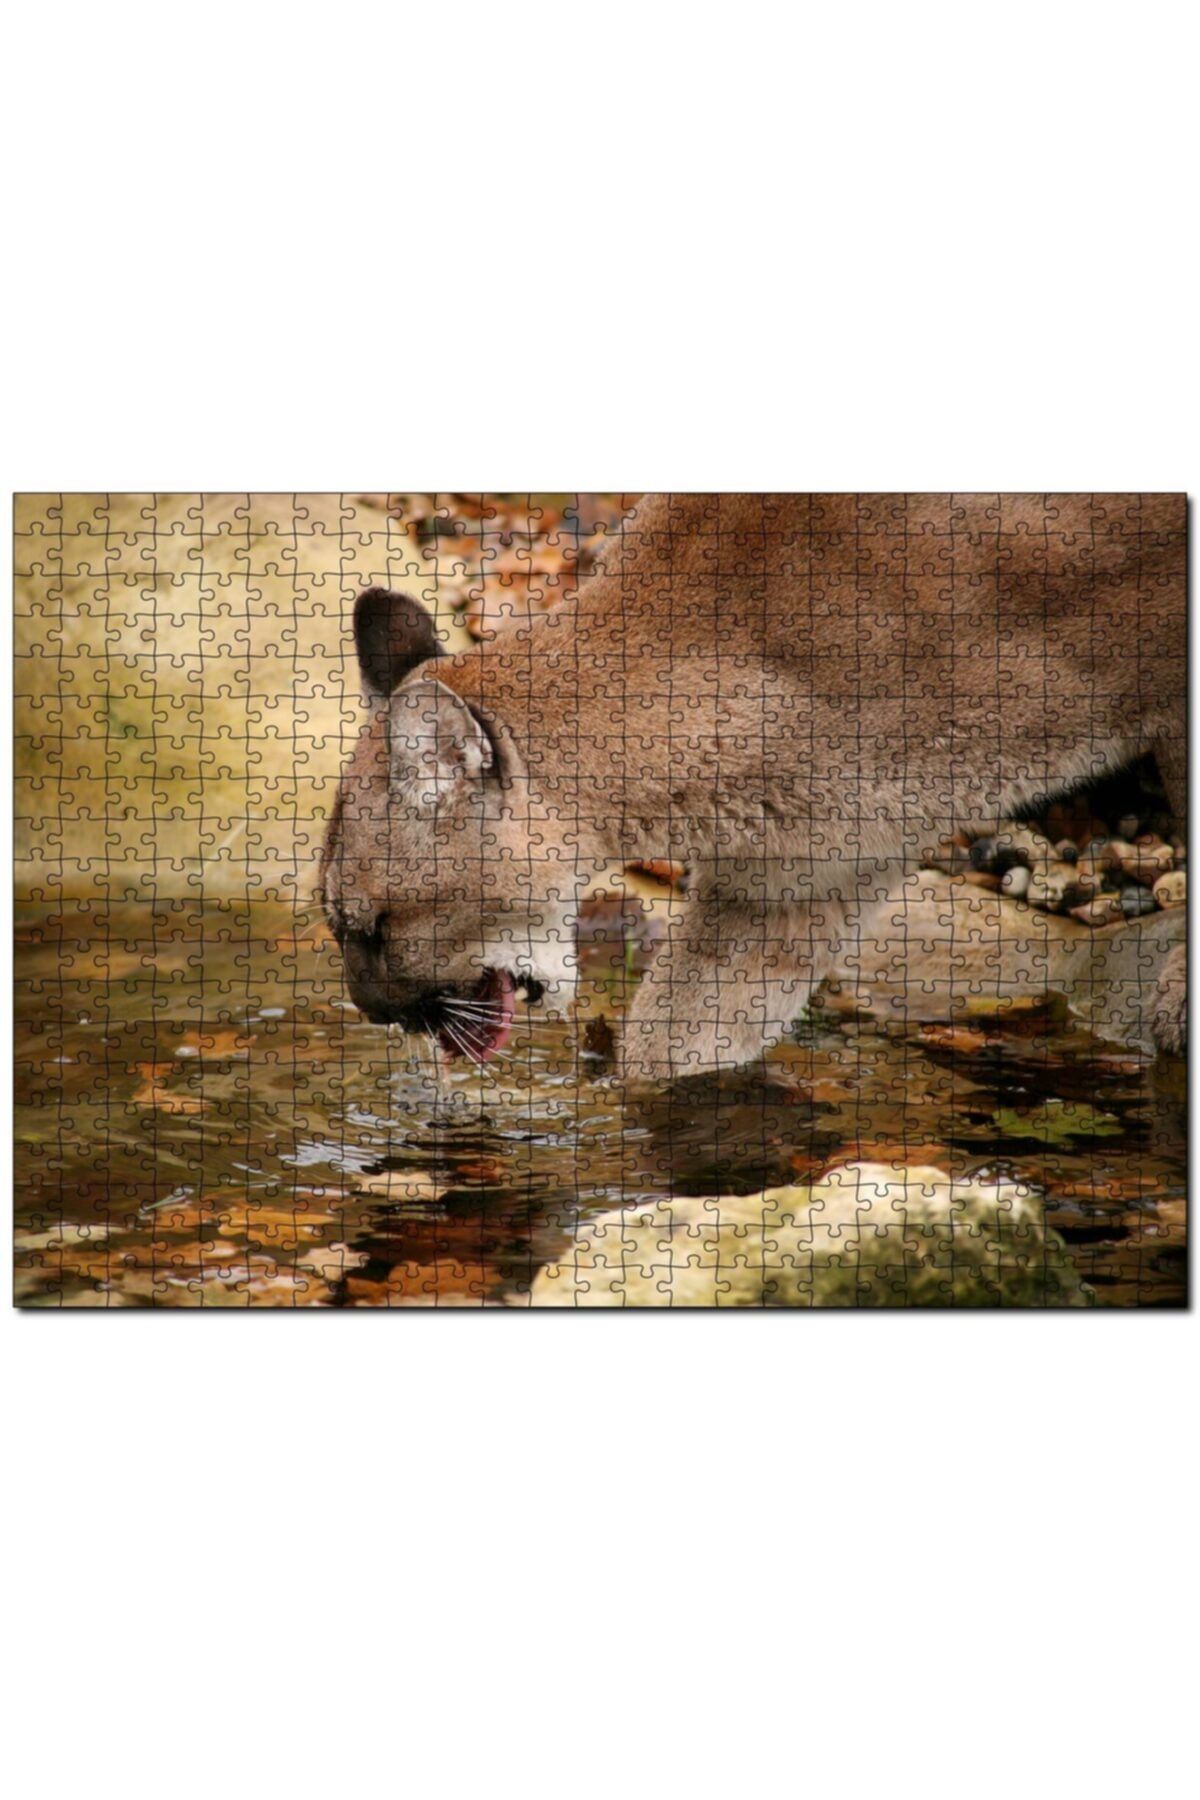 Cakapuzzle Ormandaki Puma Derede Su Içerken Görseli 500 Parça Puzzle Yapboz Mdf